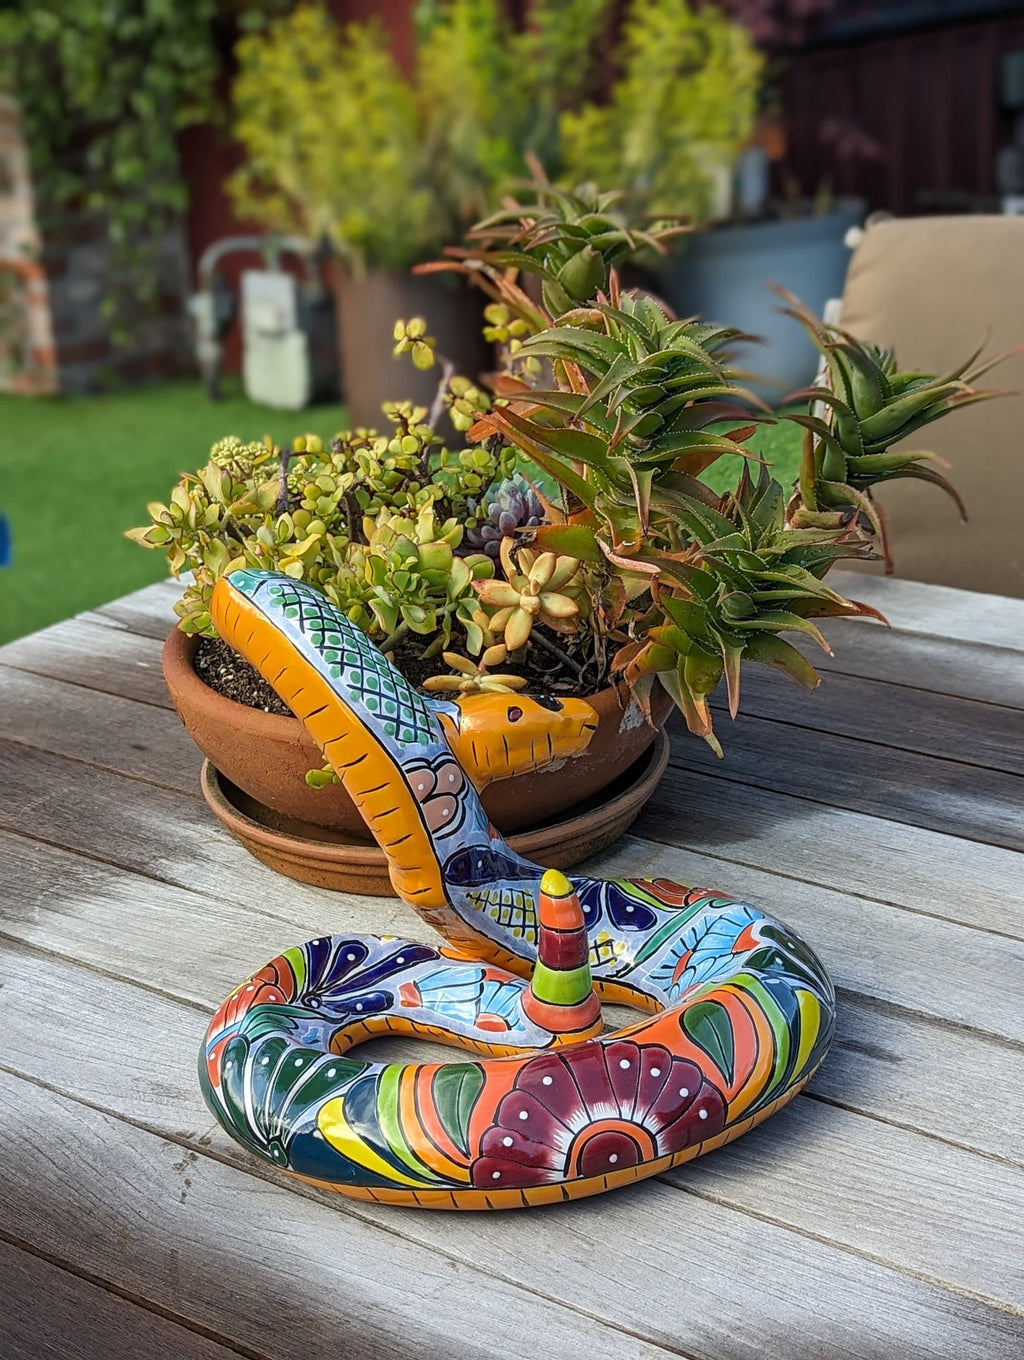 Talavera Rattlesnake Figurine Ceramic Mexican Pottery, Snake Outdoor Decor and Garden Statue Handmade in Mexico